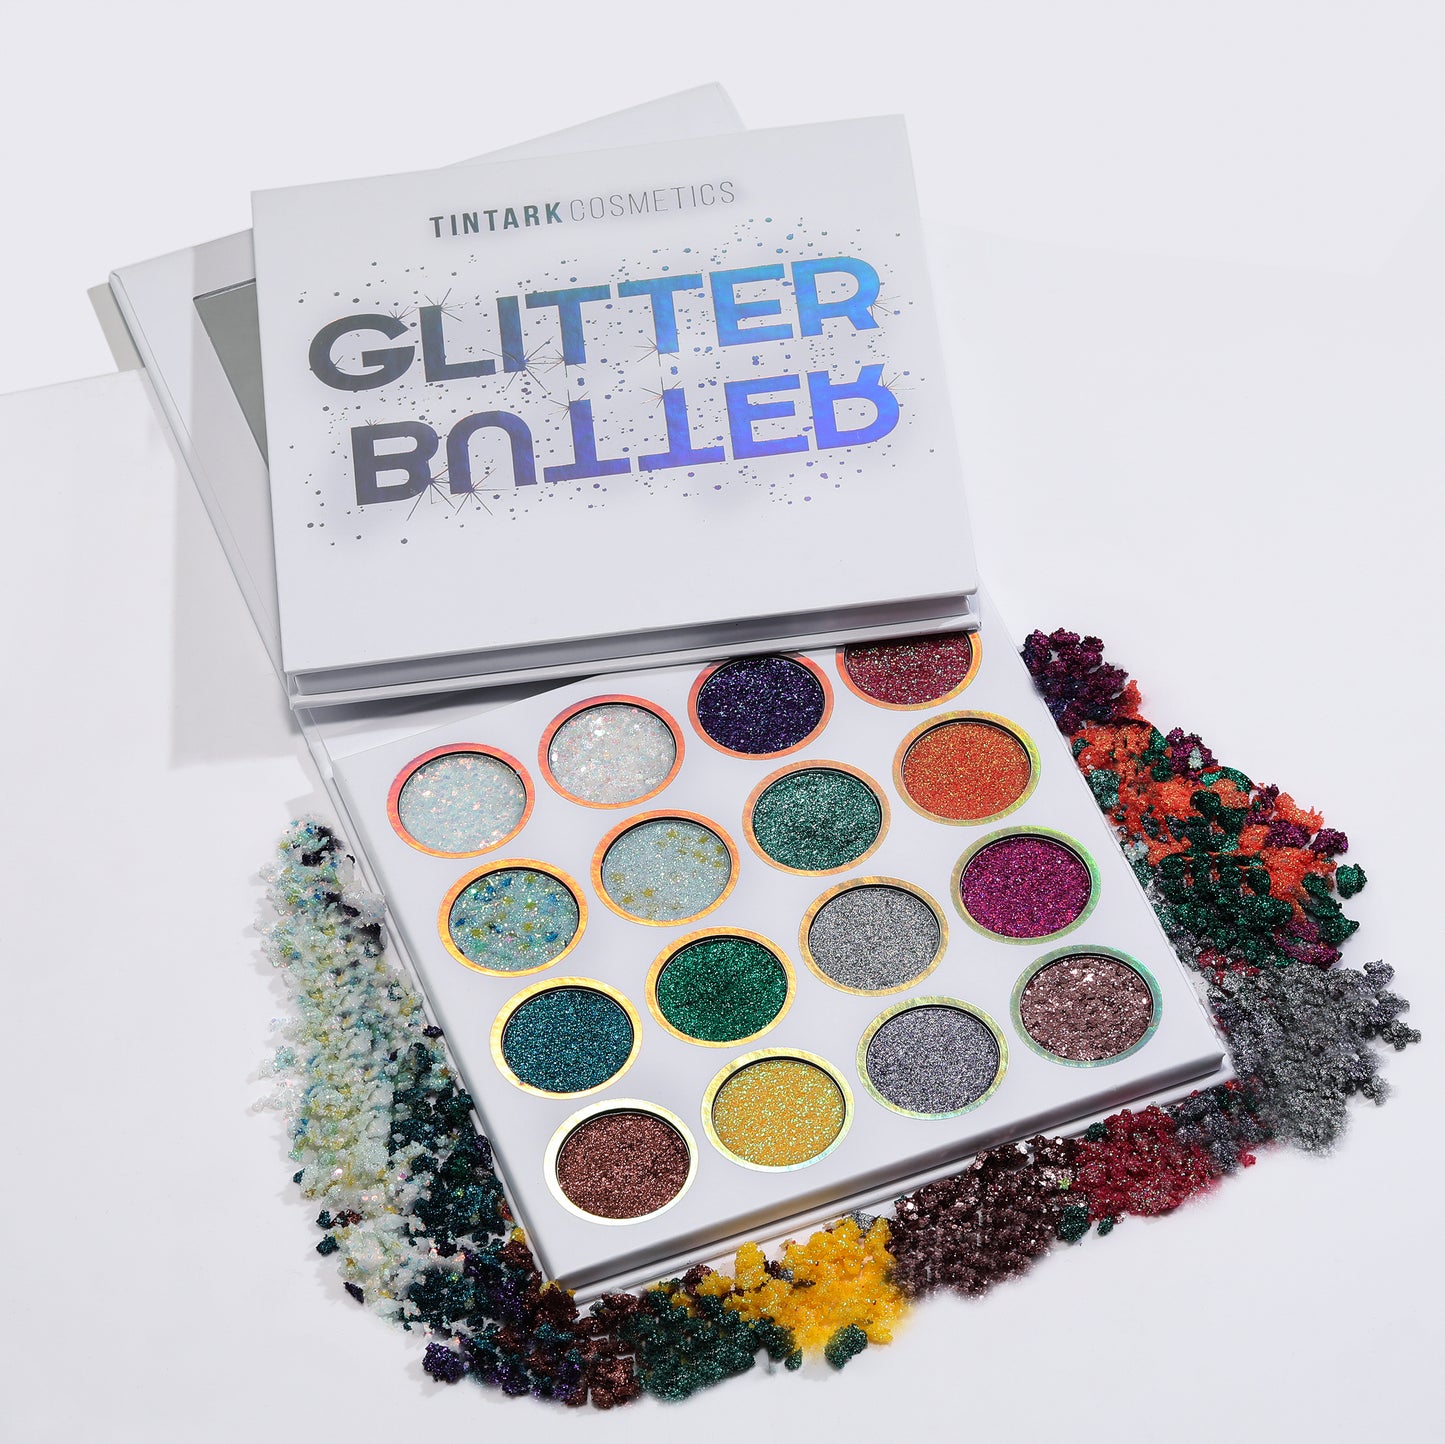 16 Color Tintark Glitter Butter Sparkle Eyeshadow Palette